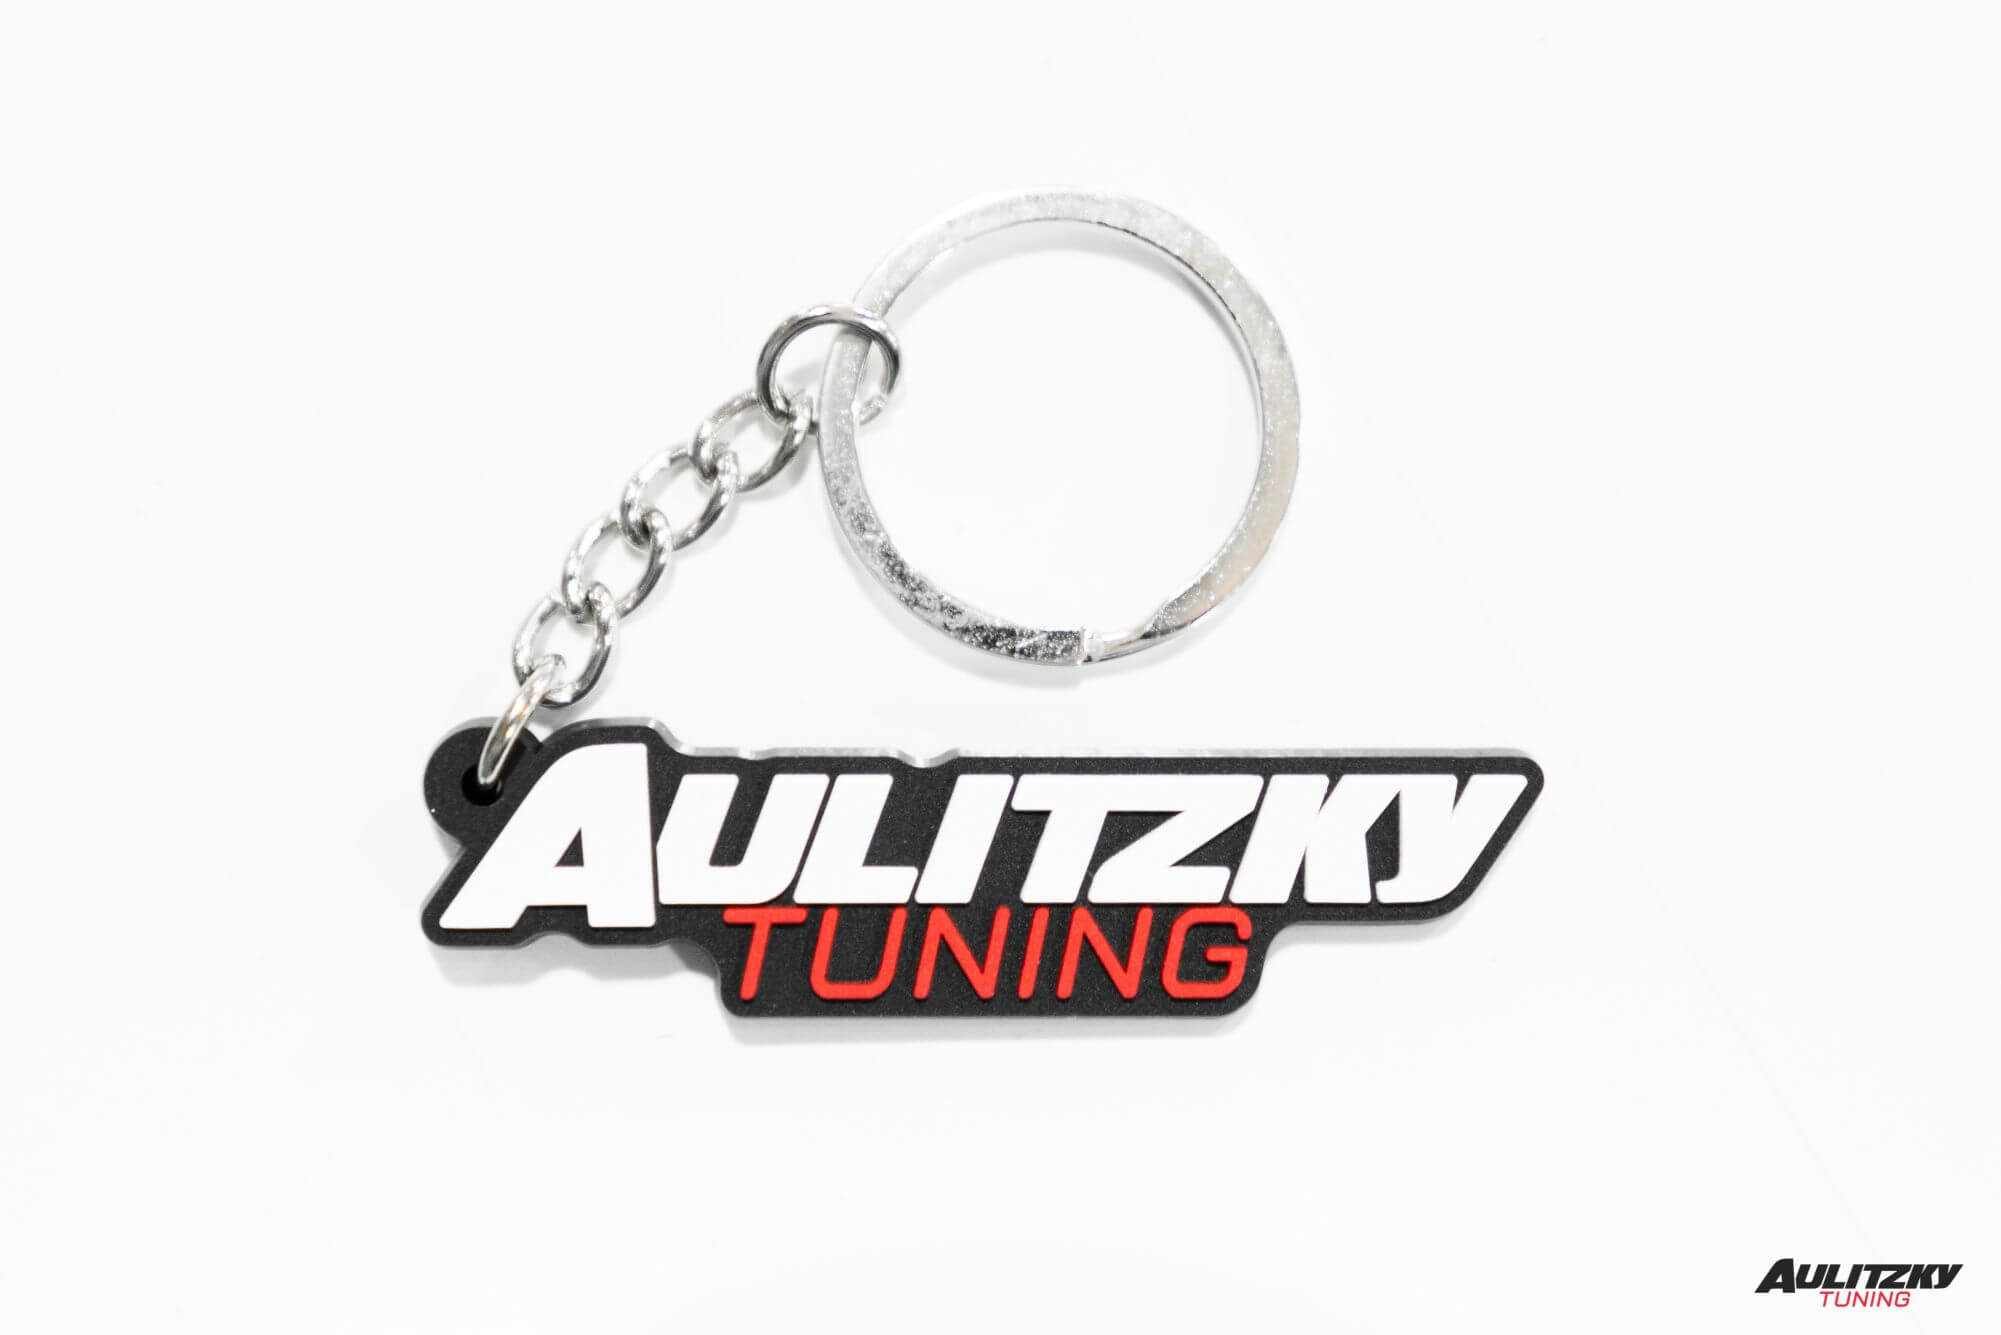 Aulitzky Tuning | Schlüsselanhänger | Aulitzky Tuning Logo | "Aulitzky-Edition"